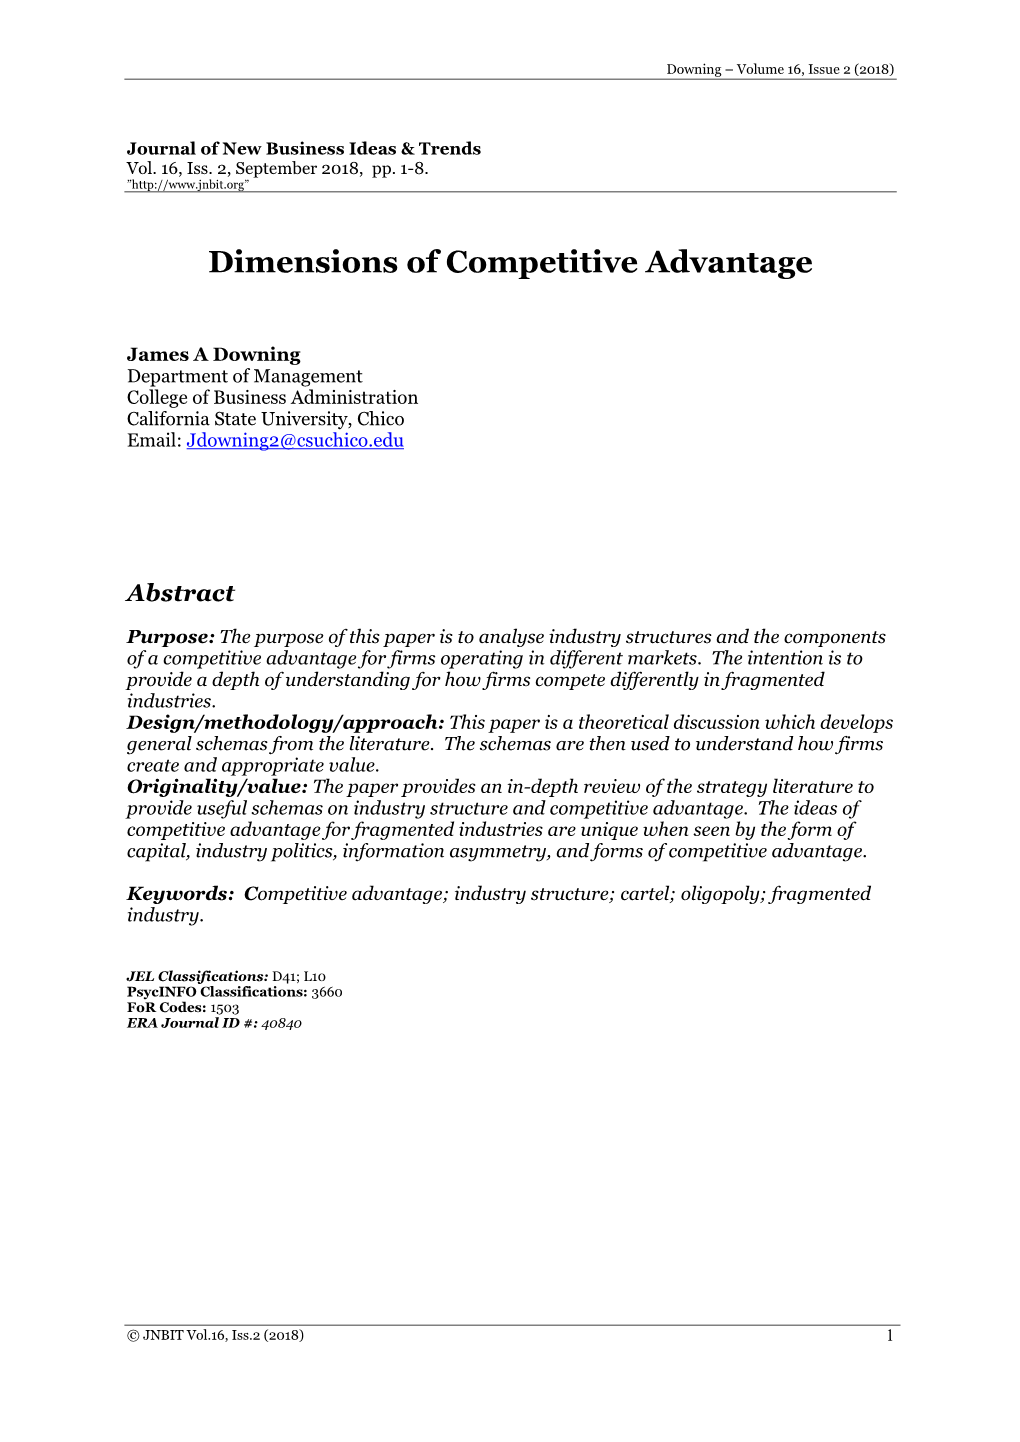 Dimensions of Competitive Advantage